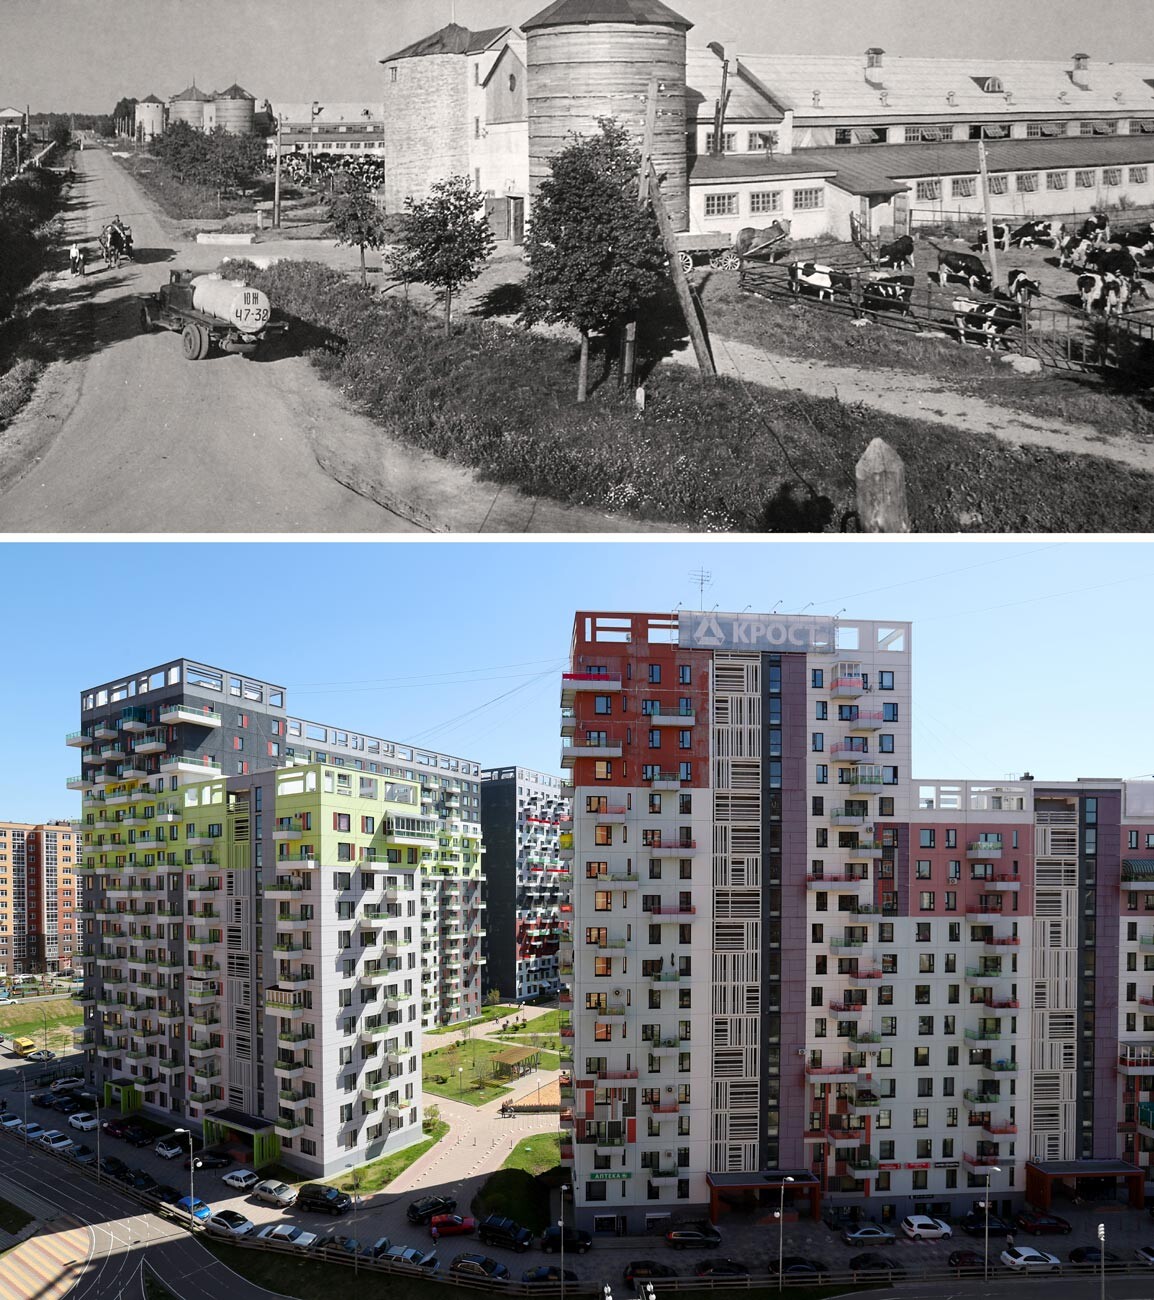 Above: Dairy farm of the Kommunarka sovkhoz, 1968. Below: New residential area.